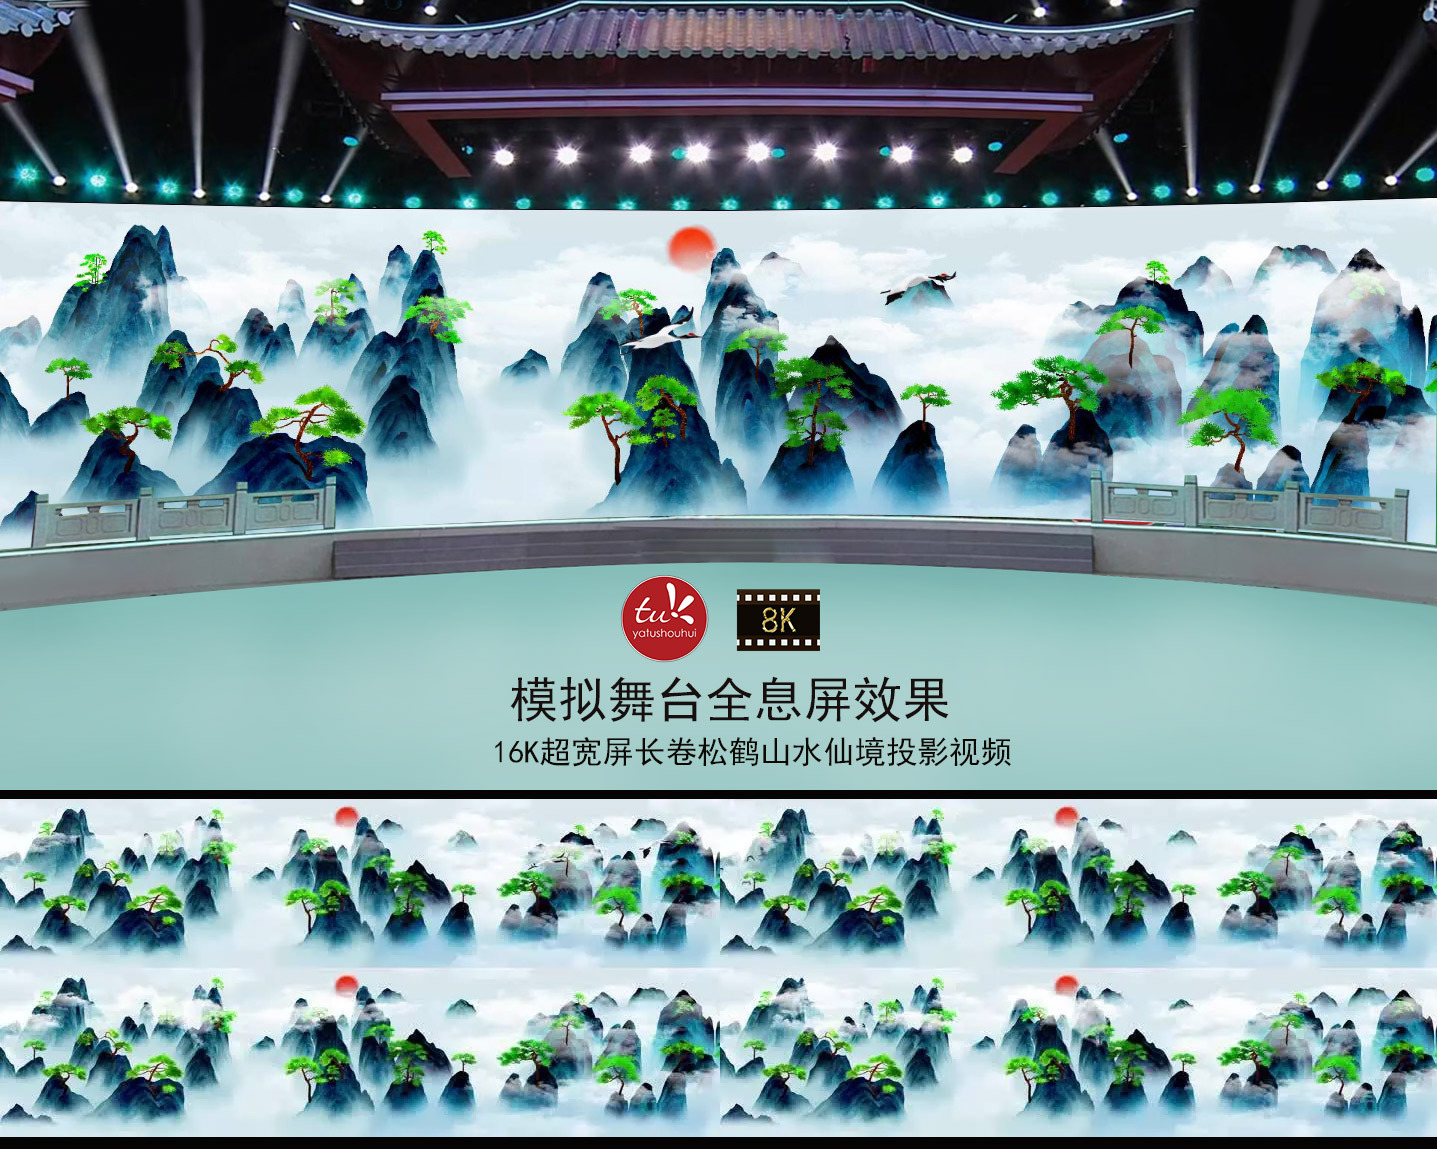 16K超宽屏长卷松鹤山水仙境投影视频